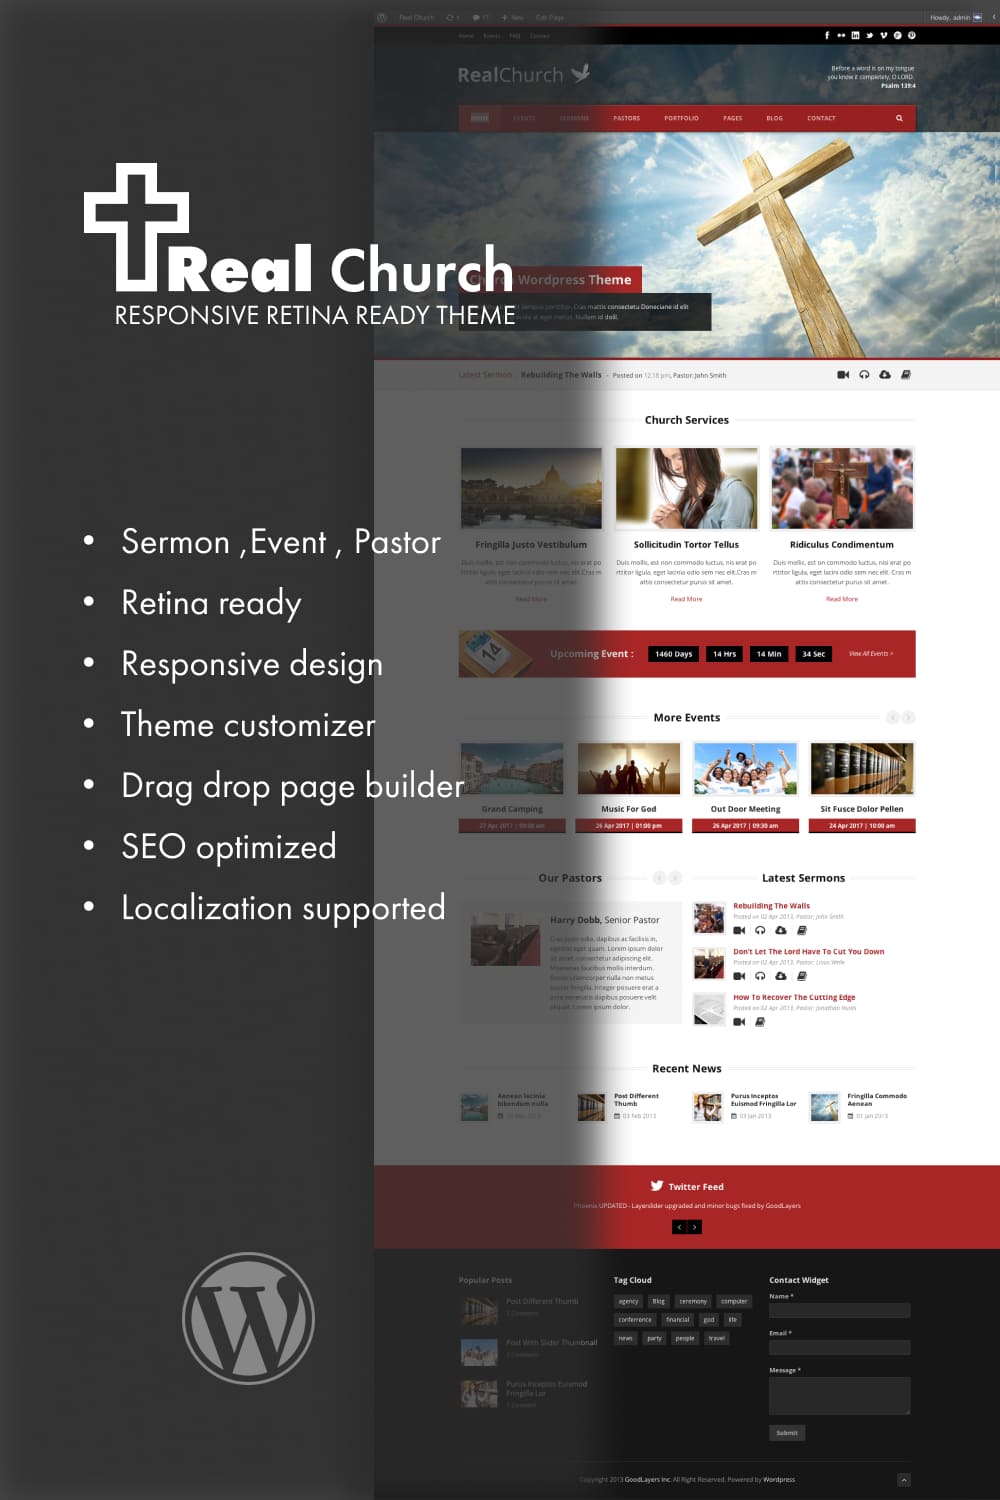 Real church responsive retina ready theme.